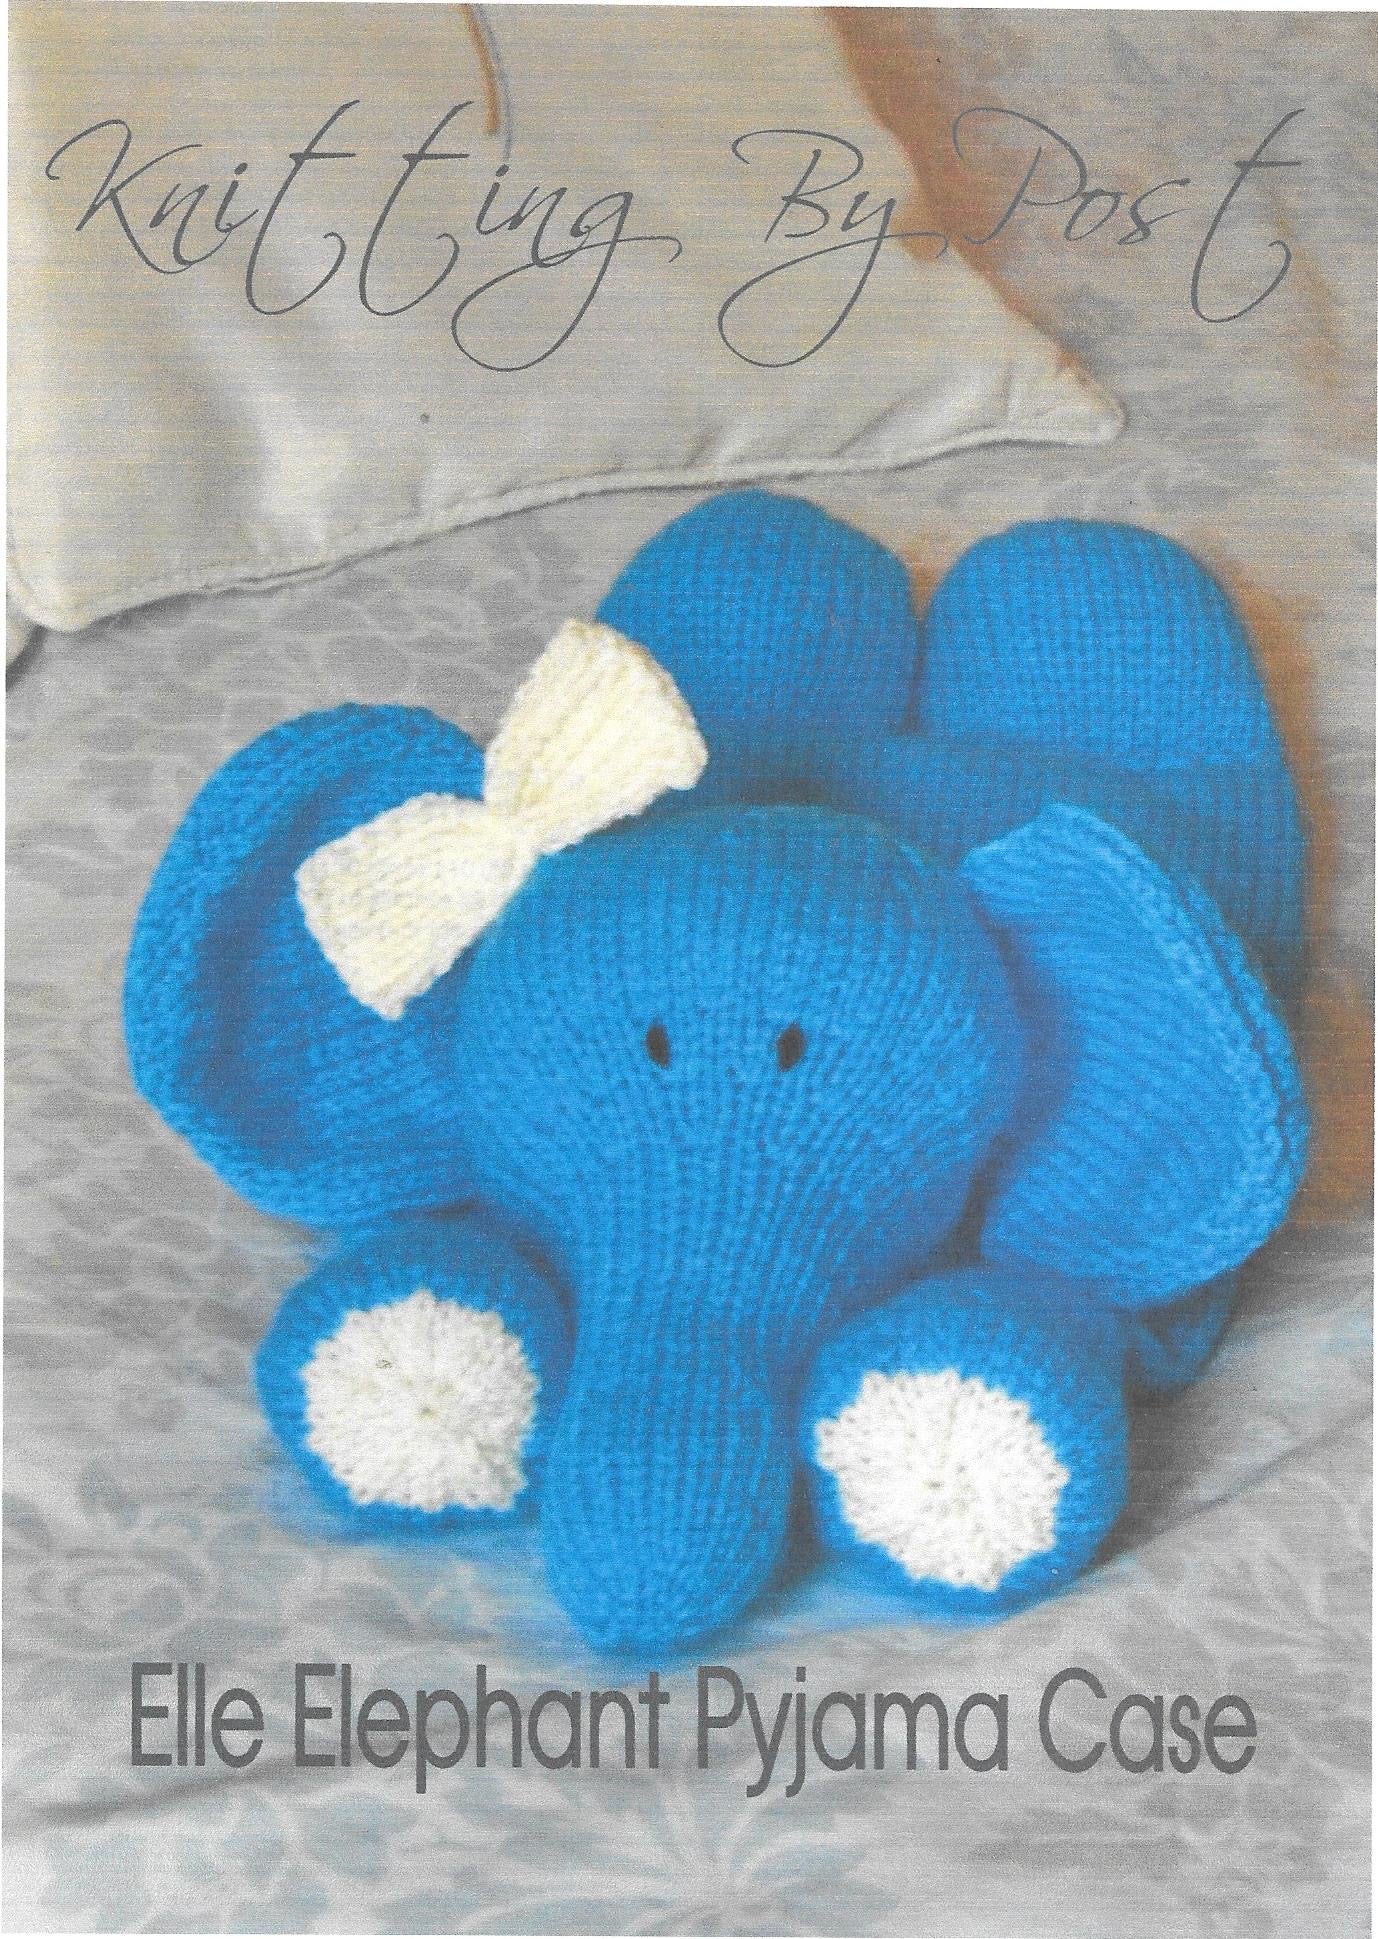 069 KBP069 Elle Elephant Pyjama case in Chunky knitting pattern